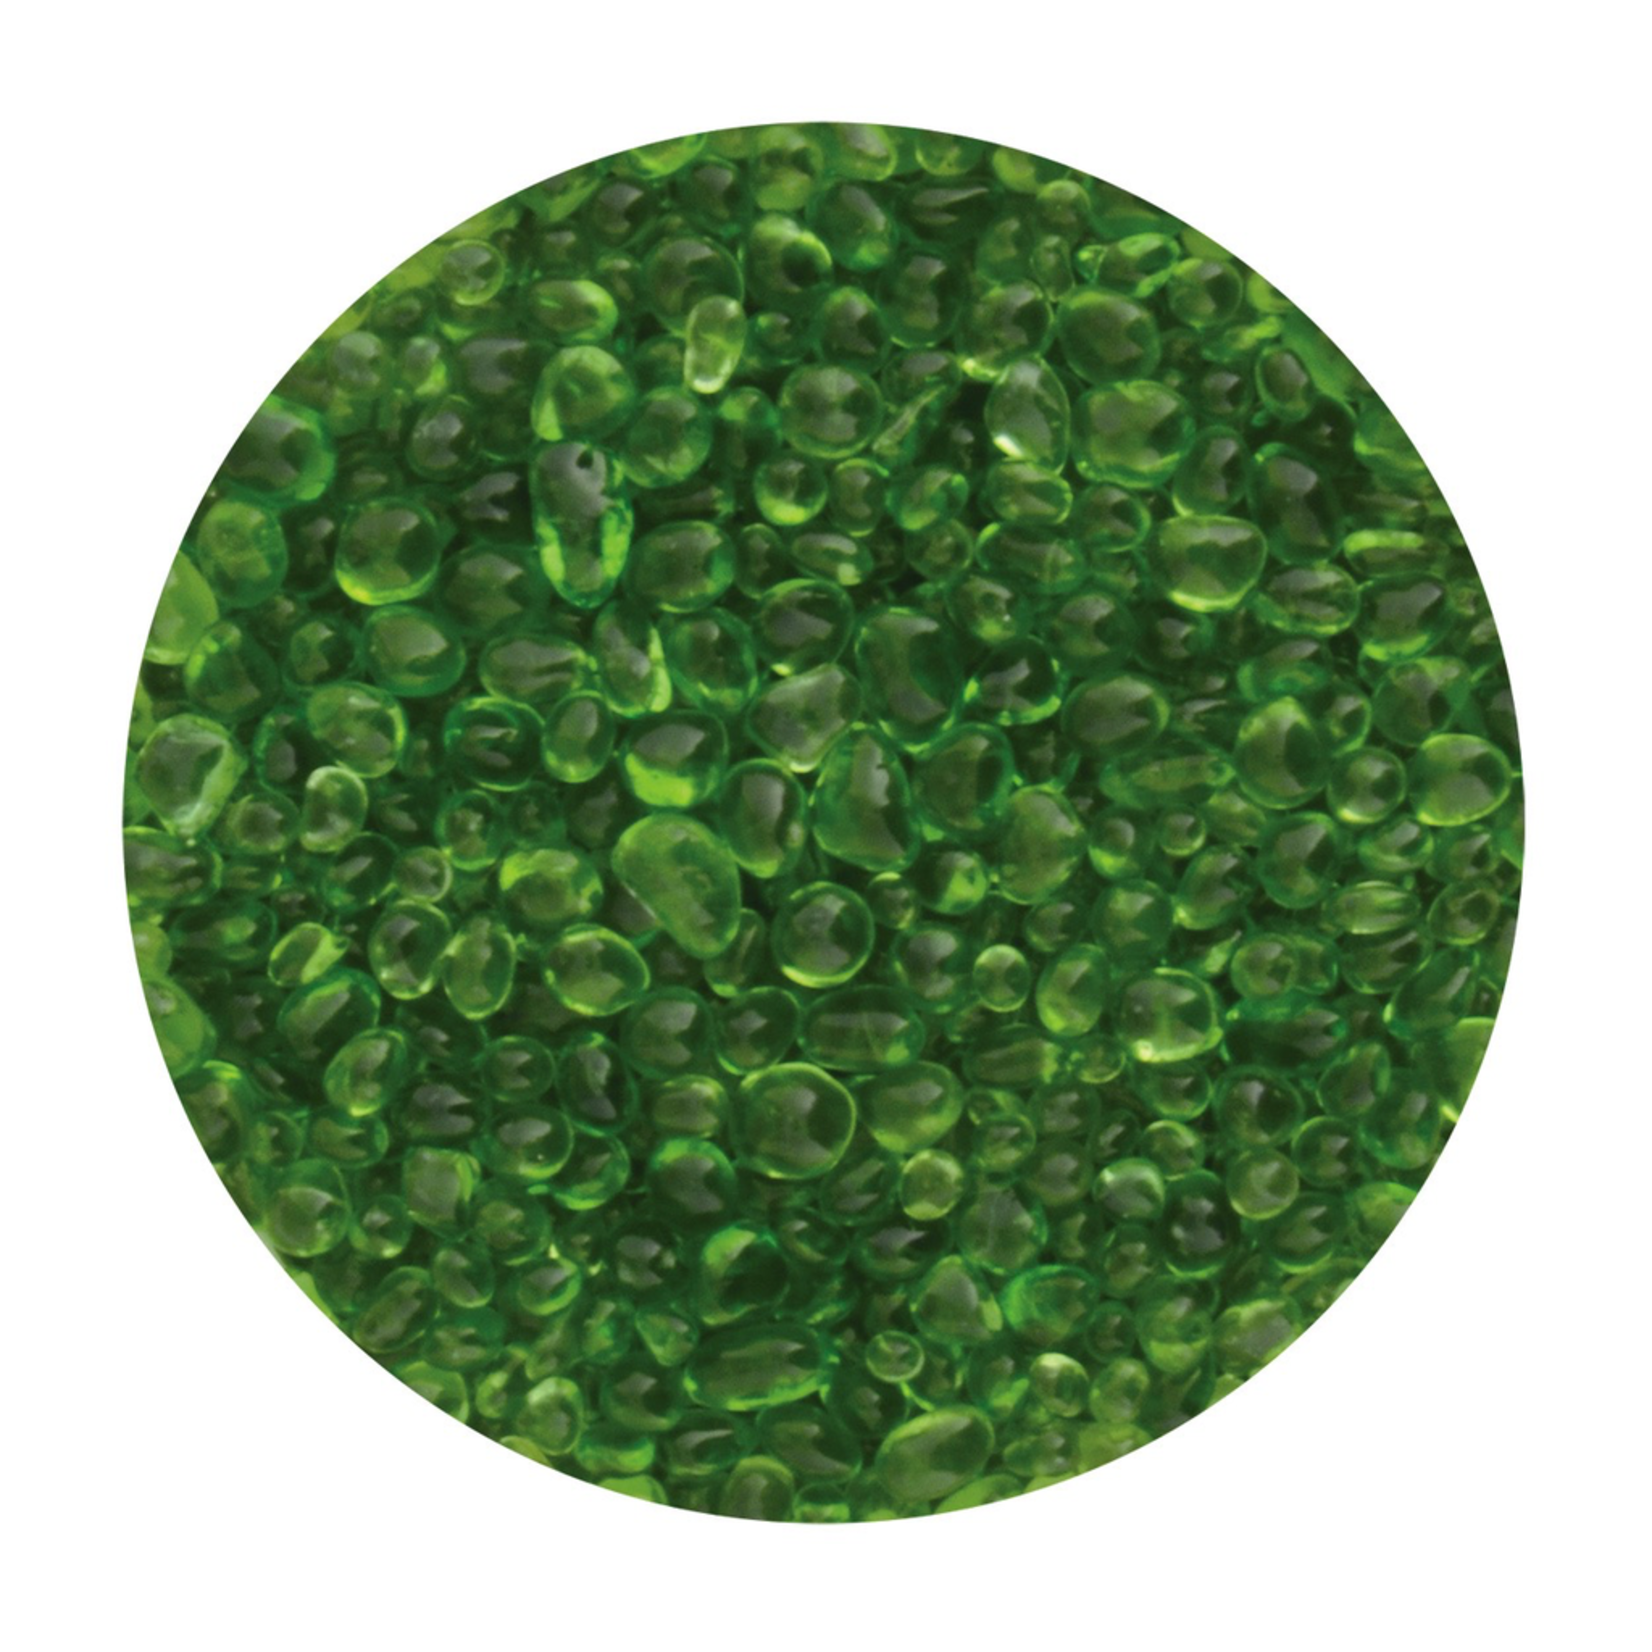 SEAPORA Betta Gravel - Green - 350 g